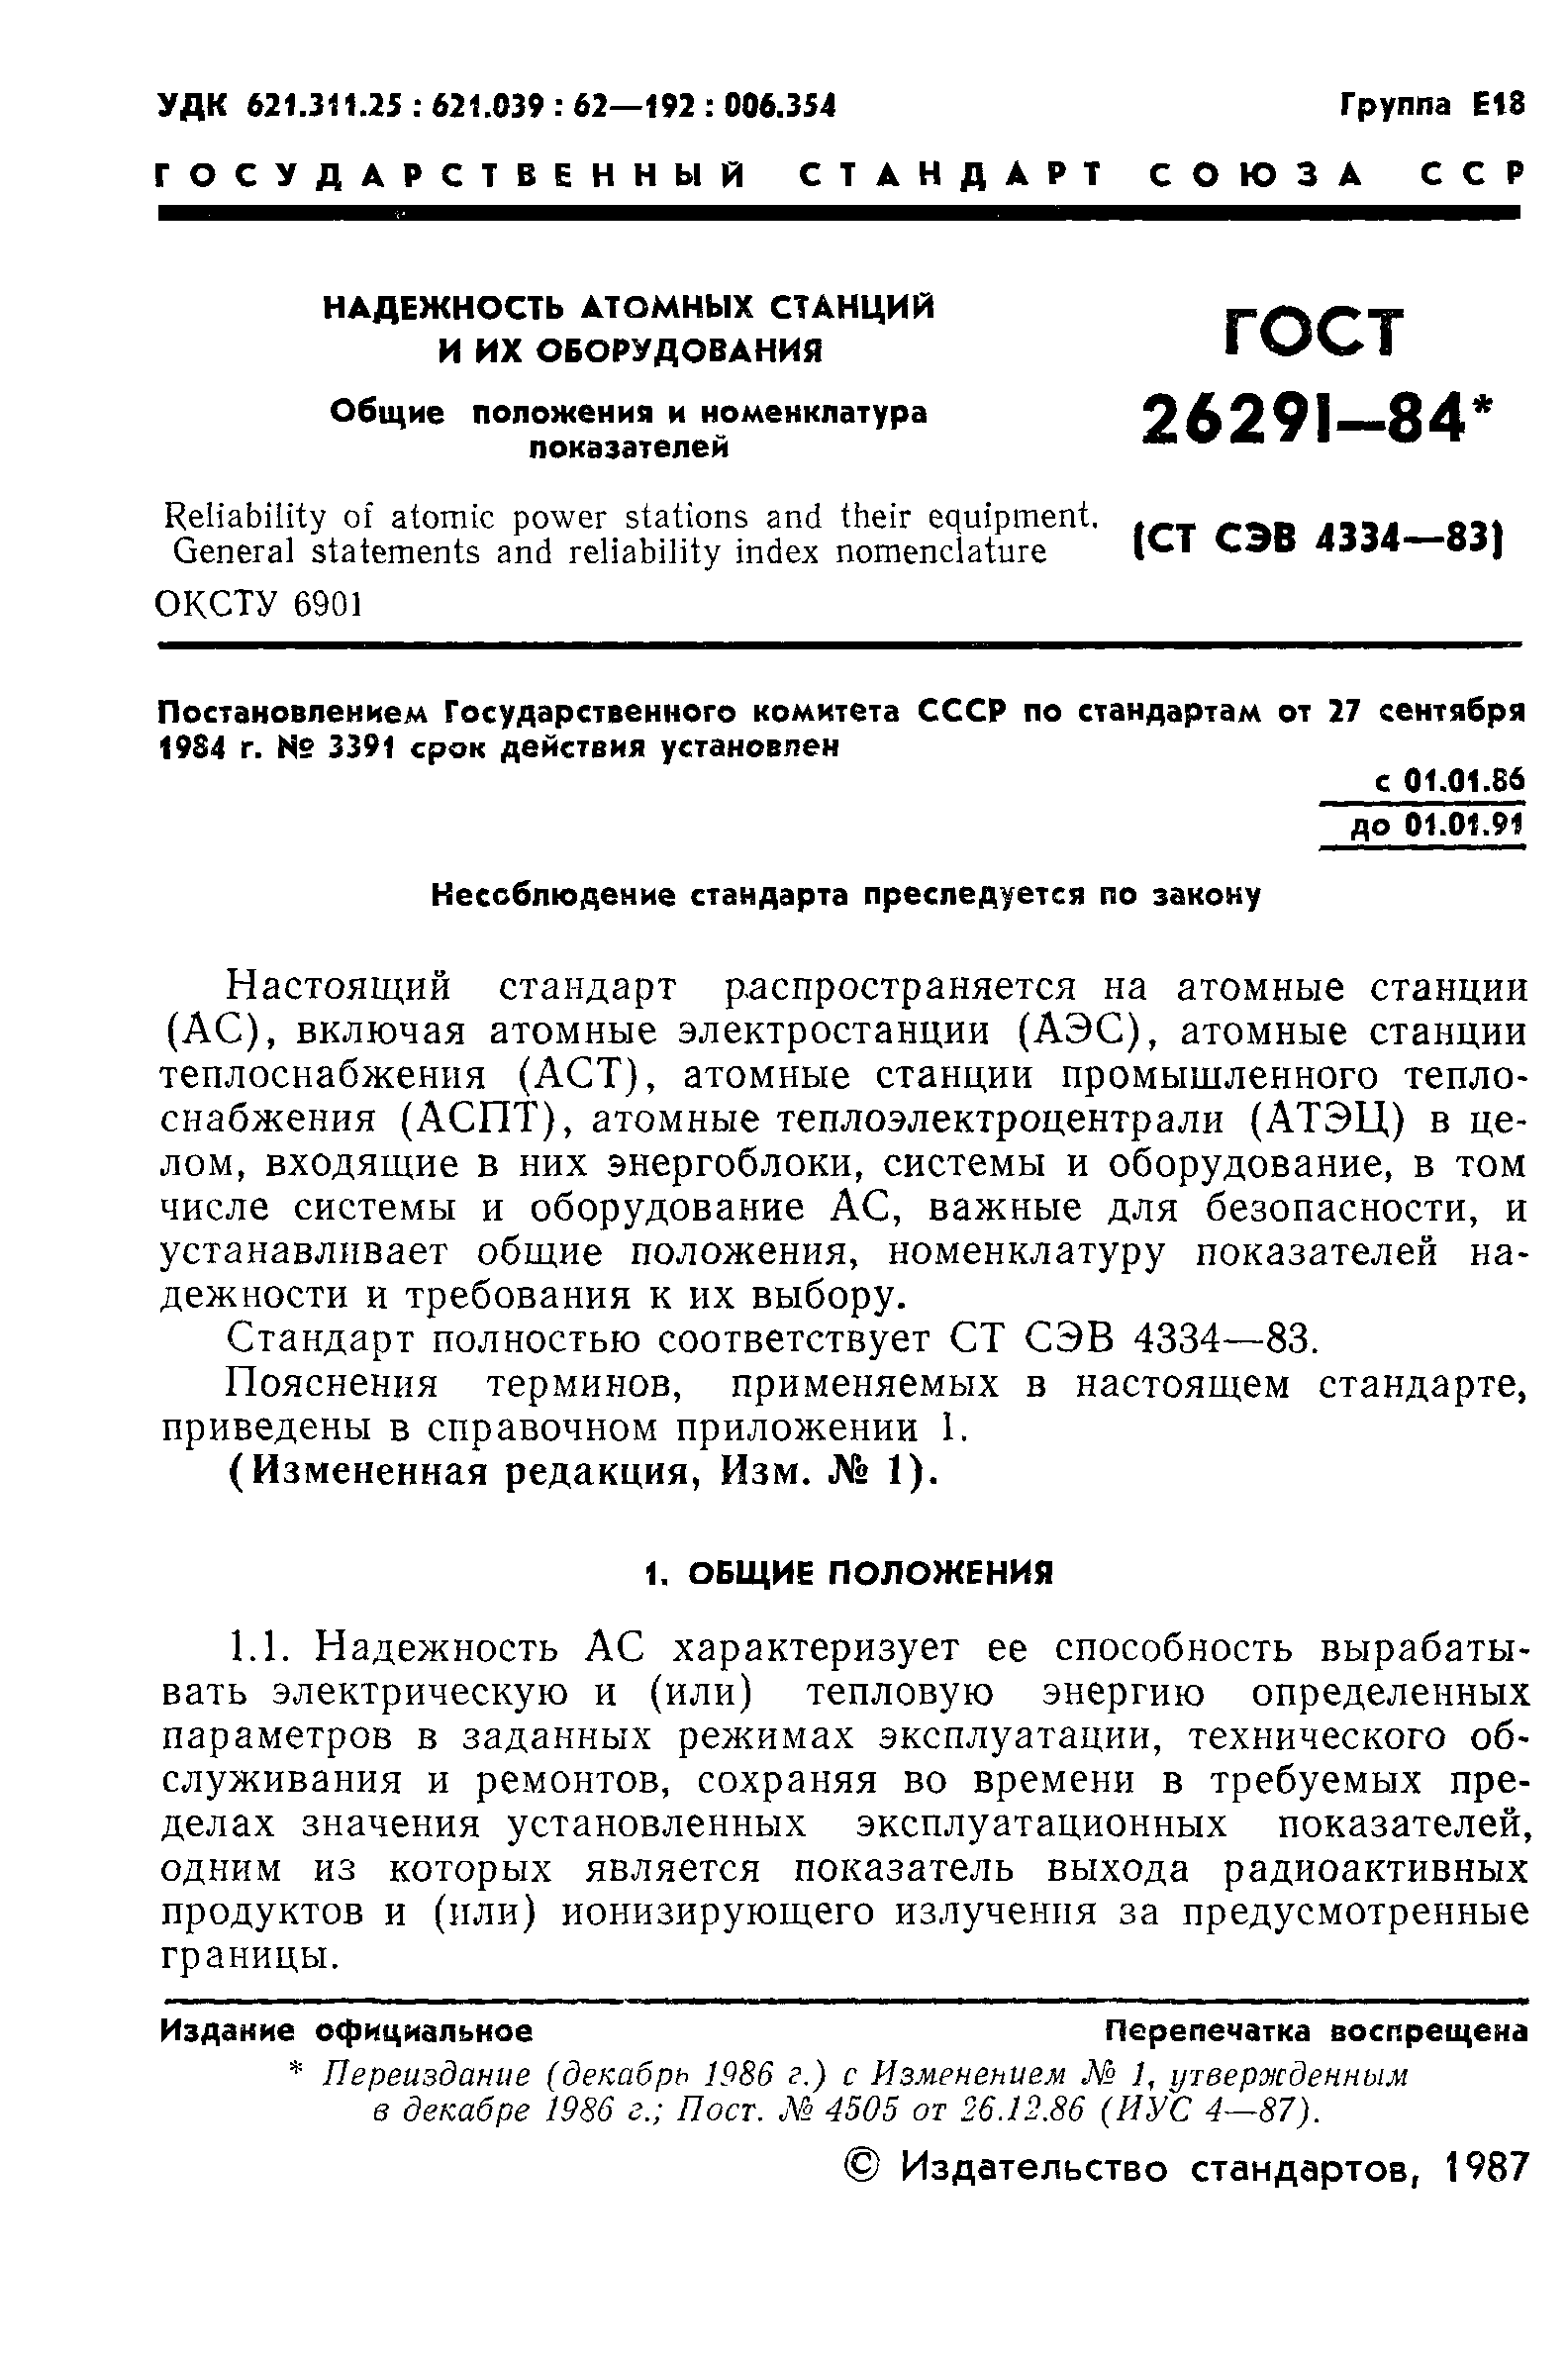 ГОСТ 26291-84